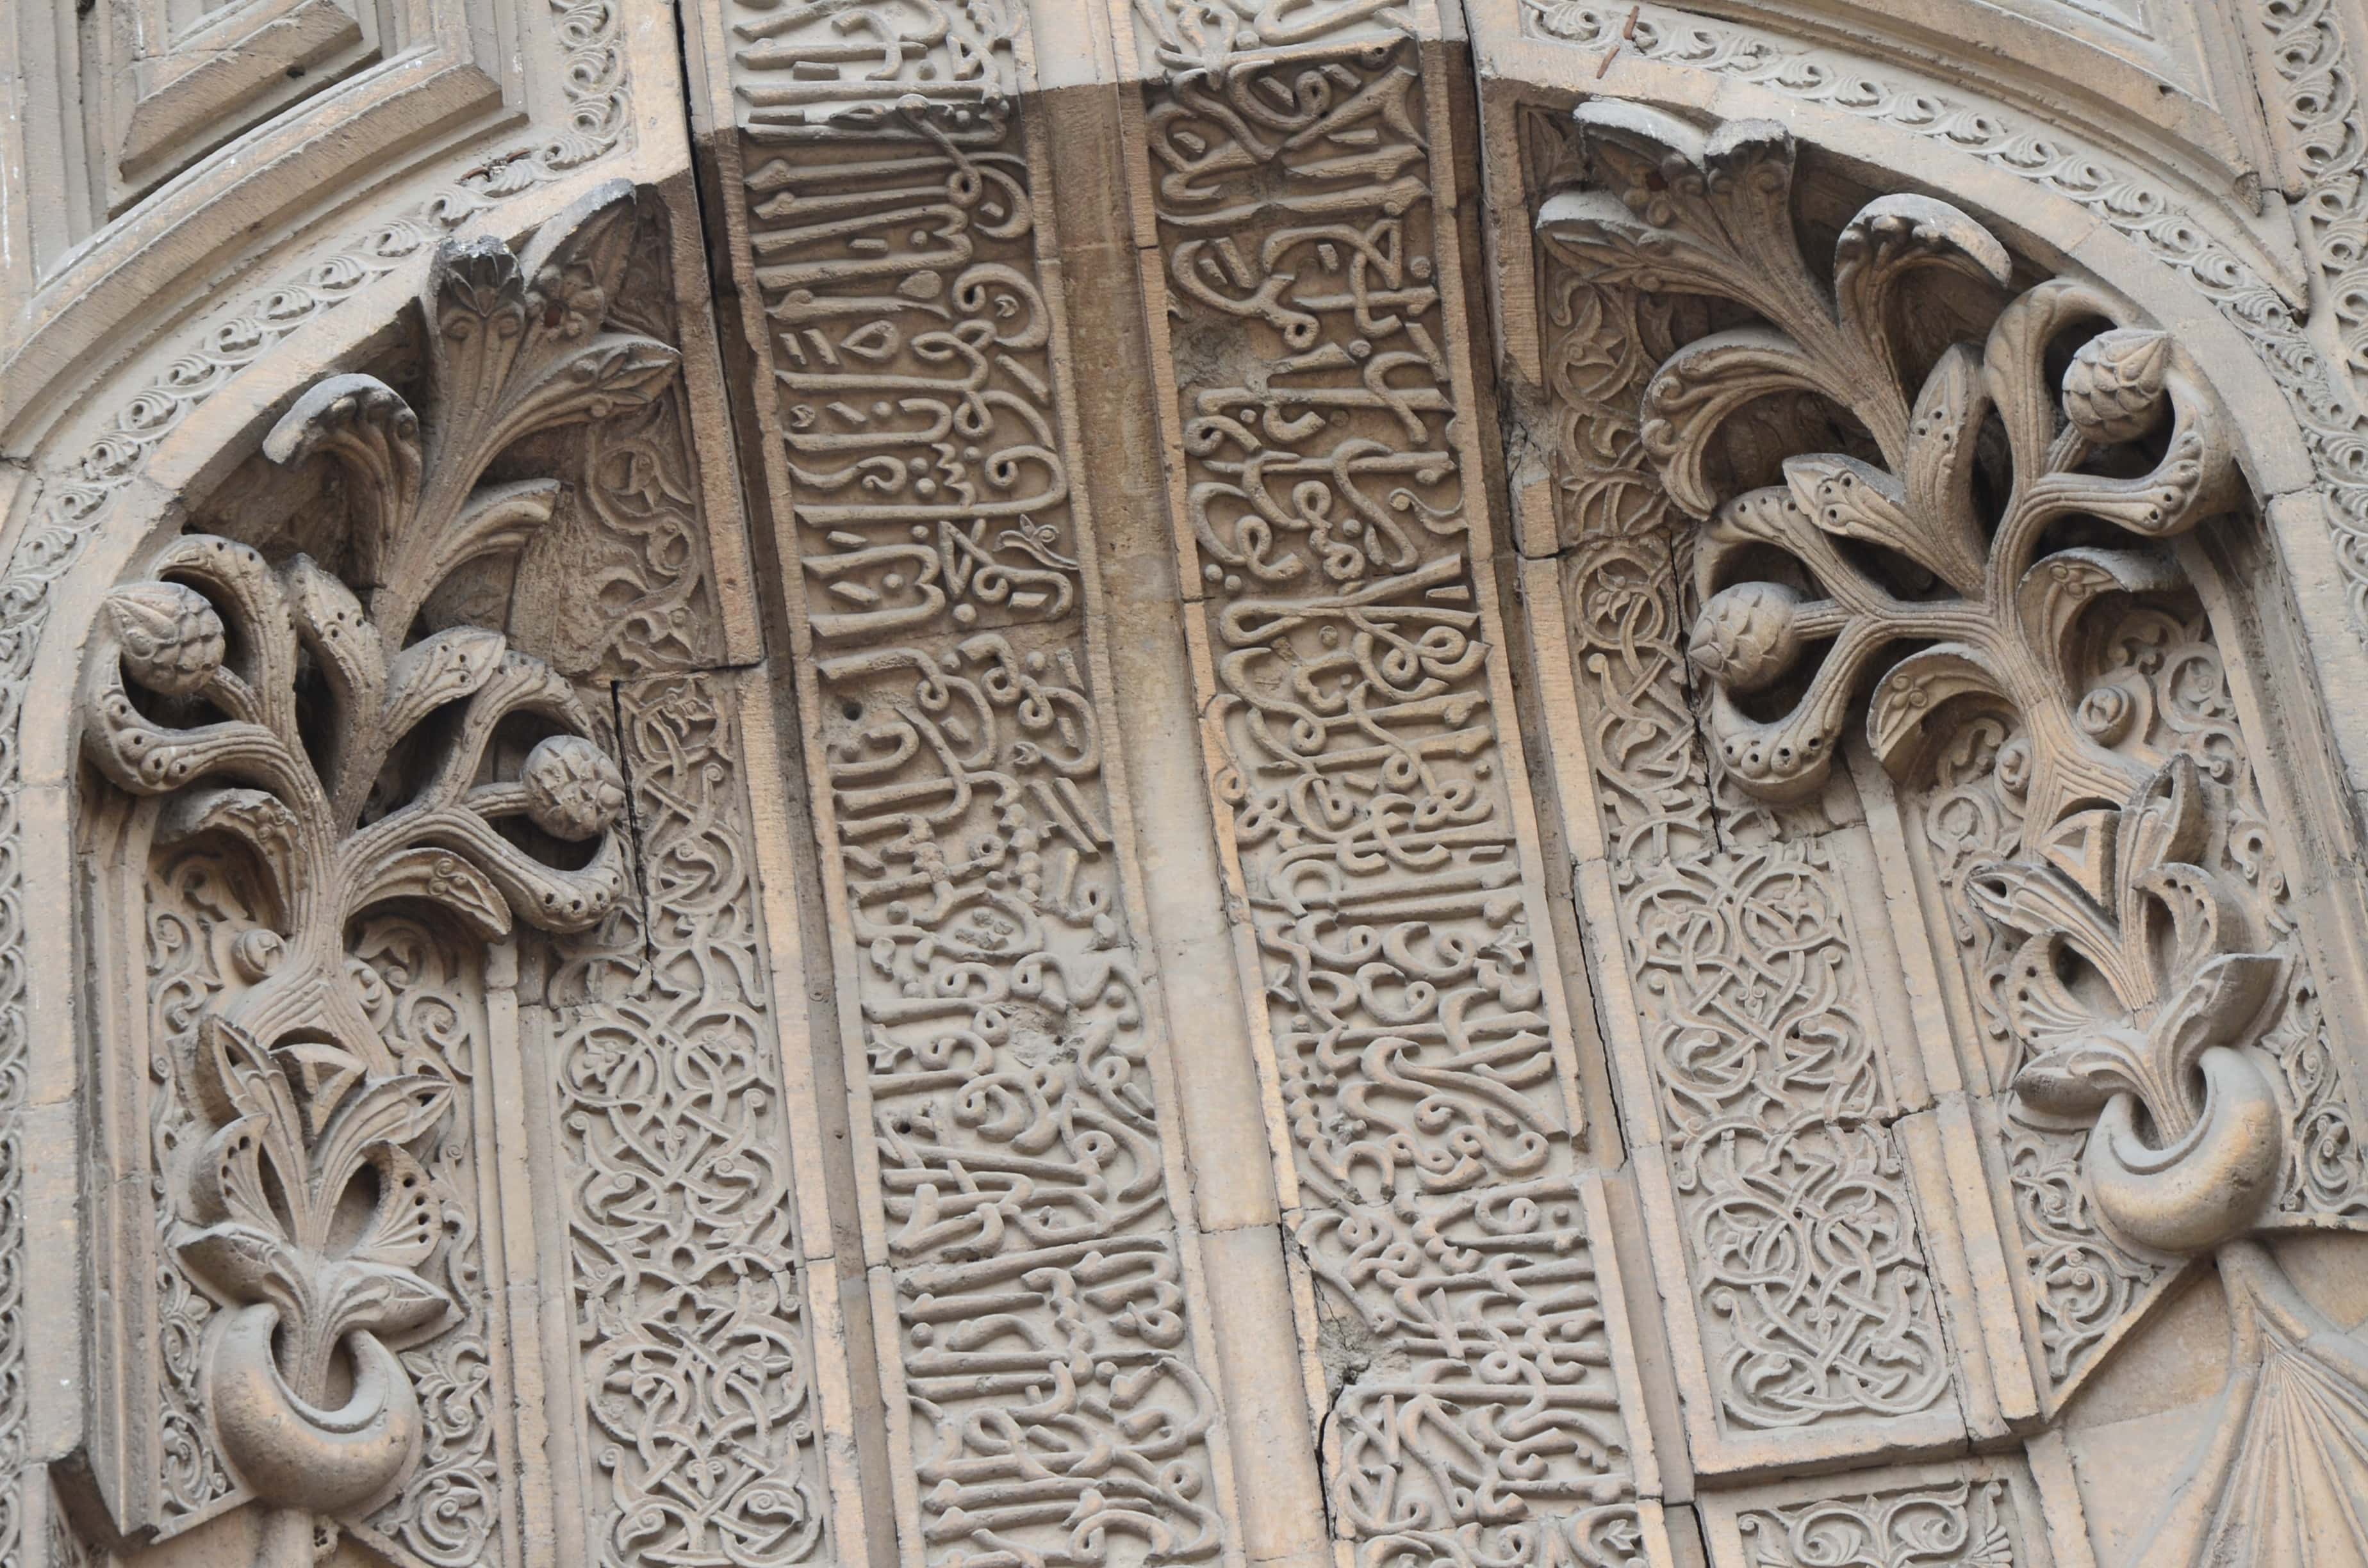 Quranic script on the entrance to the Ince Minareli Madrasa